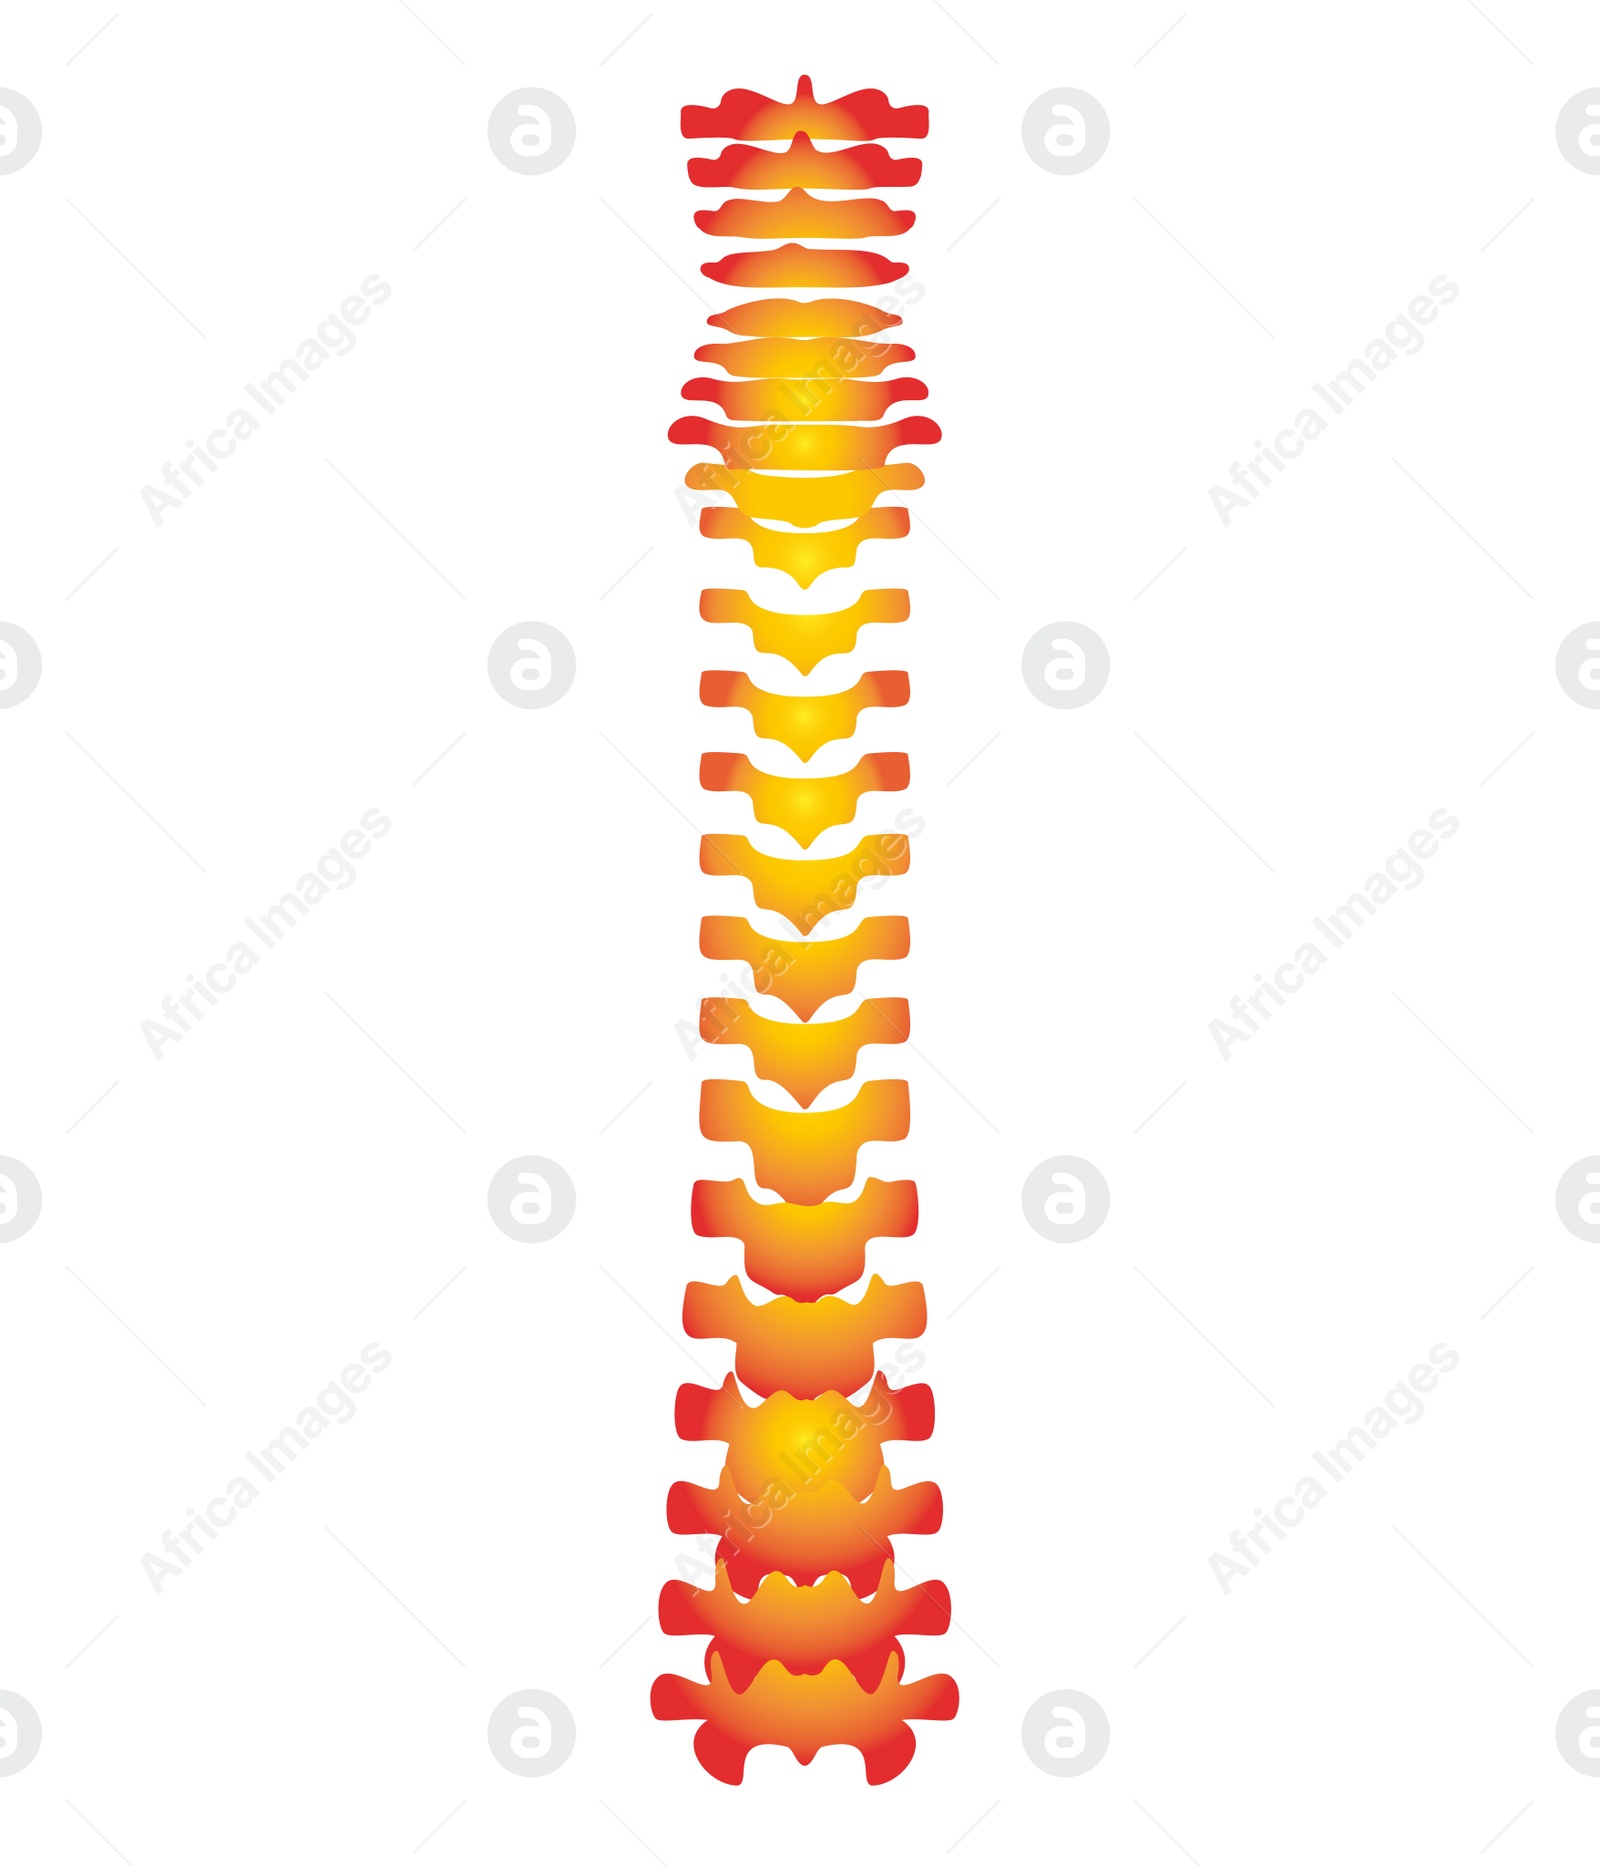 Illustration of  human spine on white background